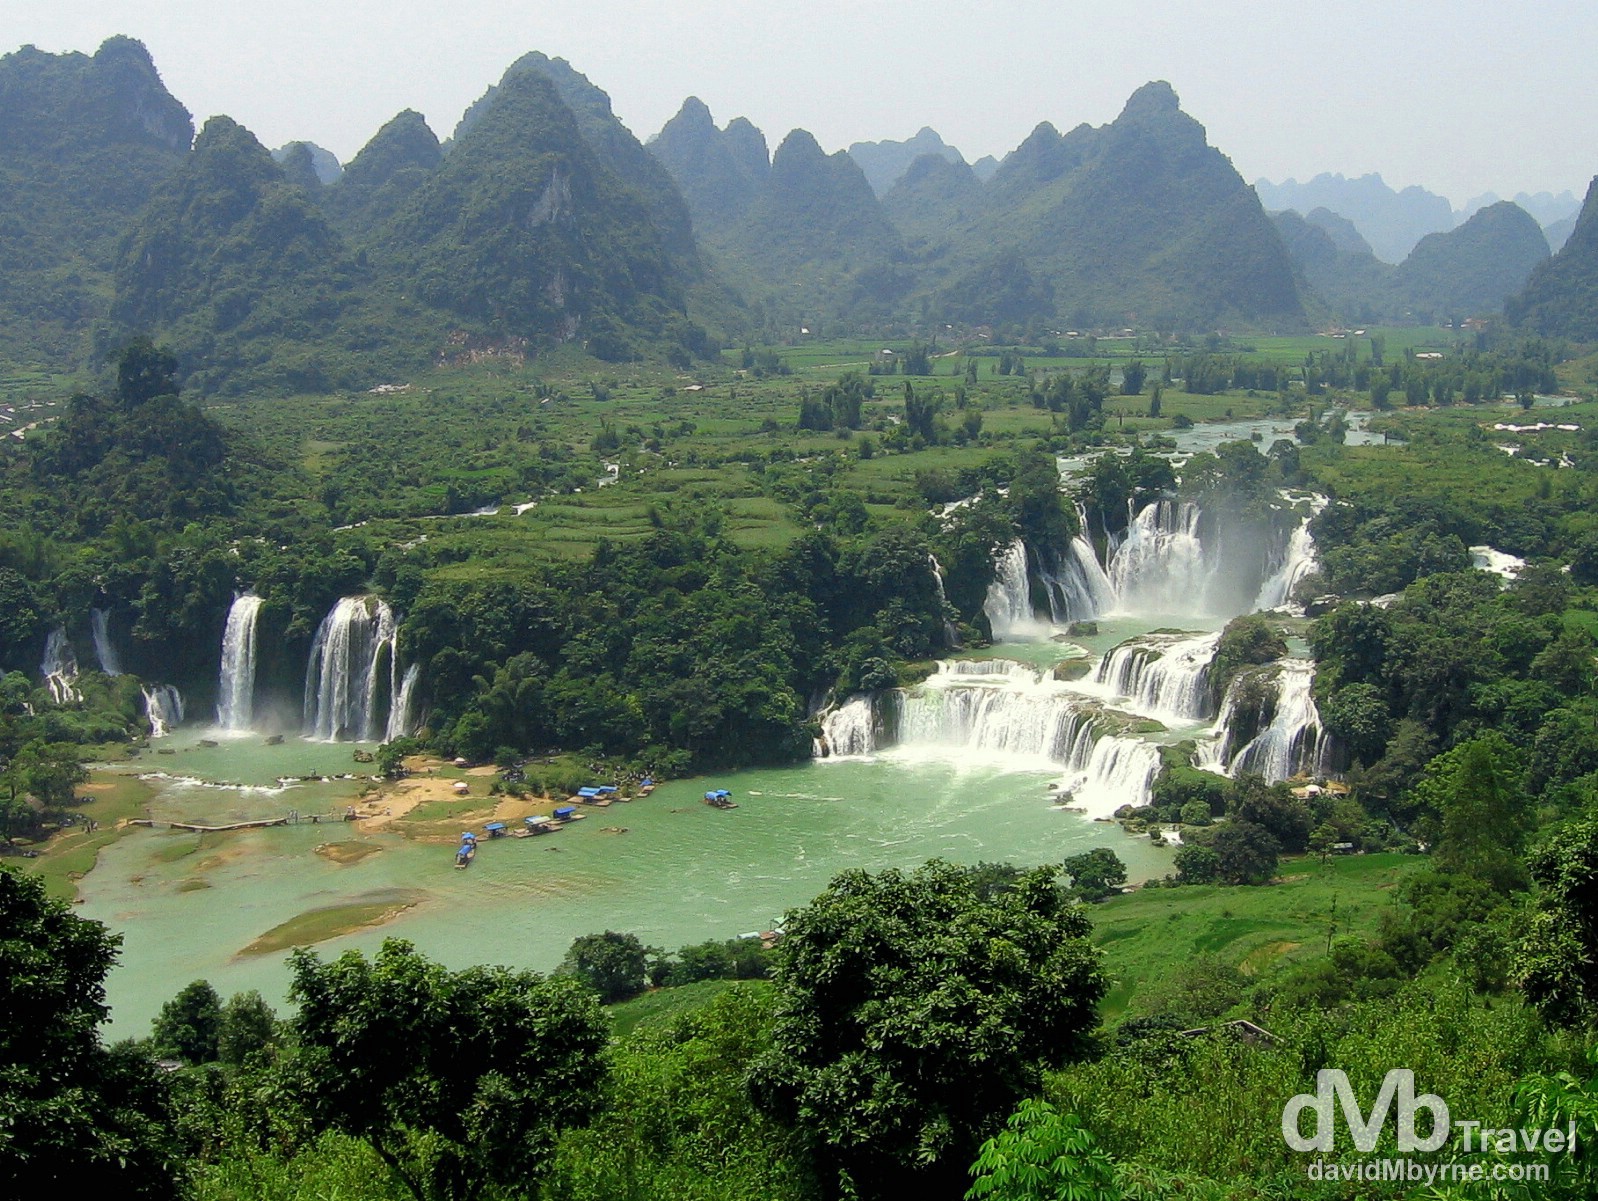 An overview of the impressive Detian Falls (Ban Gioc) straddling the Sino-Vietnamese border. September 2, 2005.